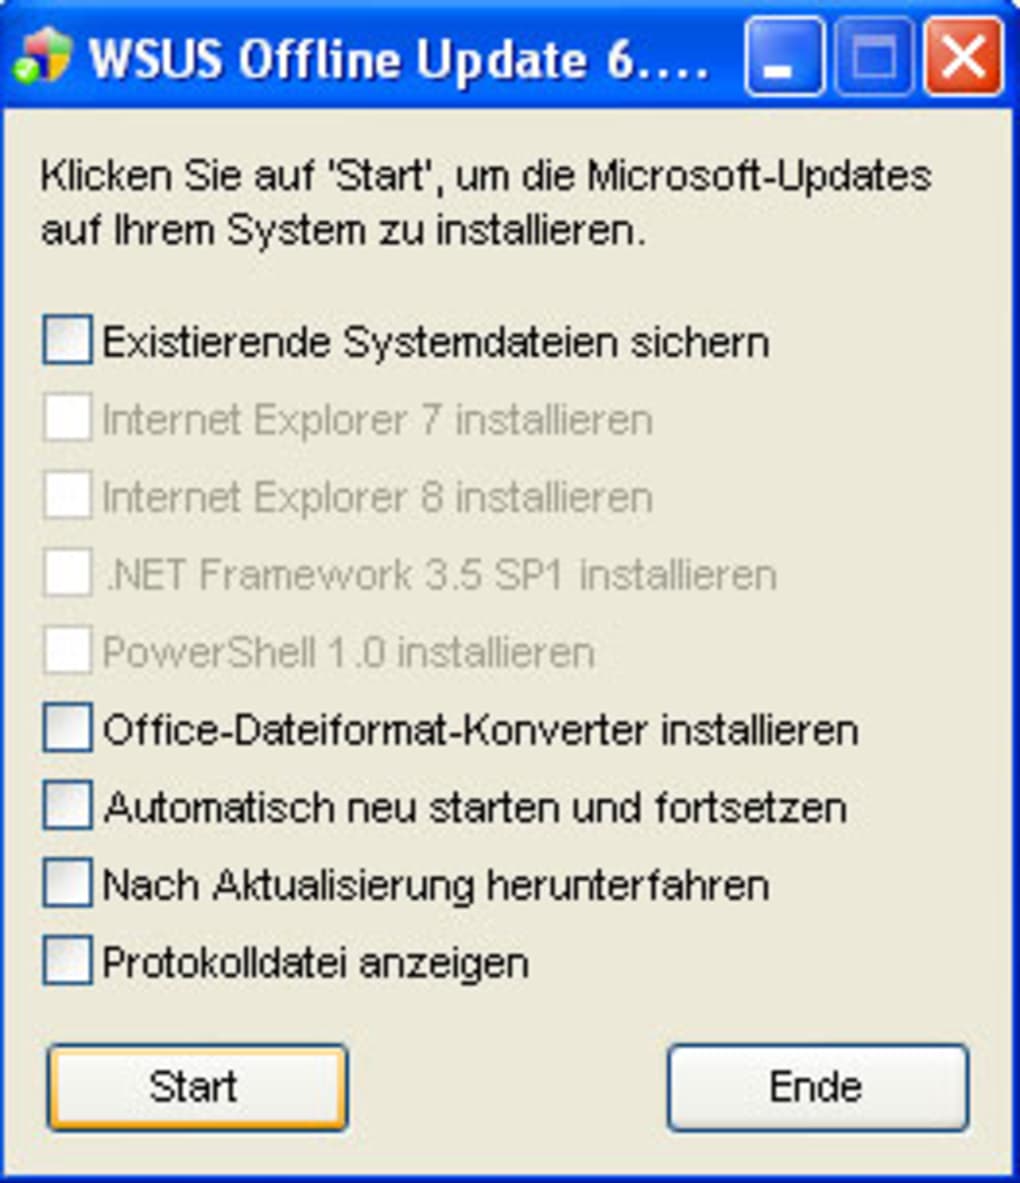 microsoft office 2008 mac downloads